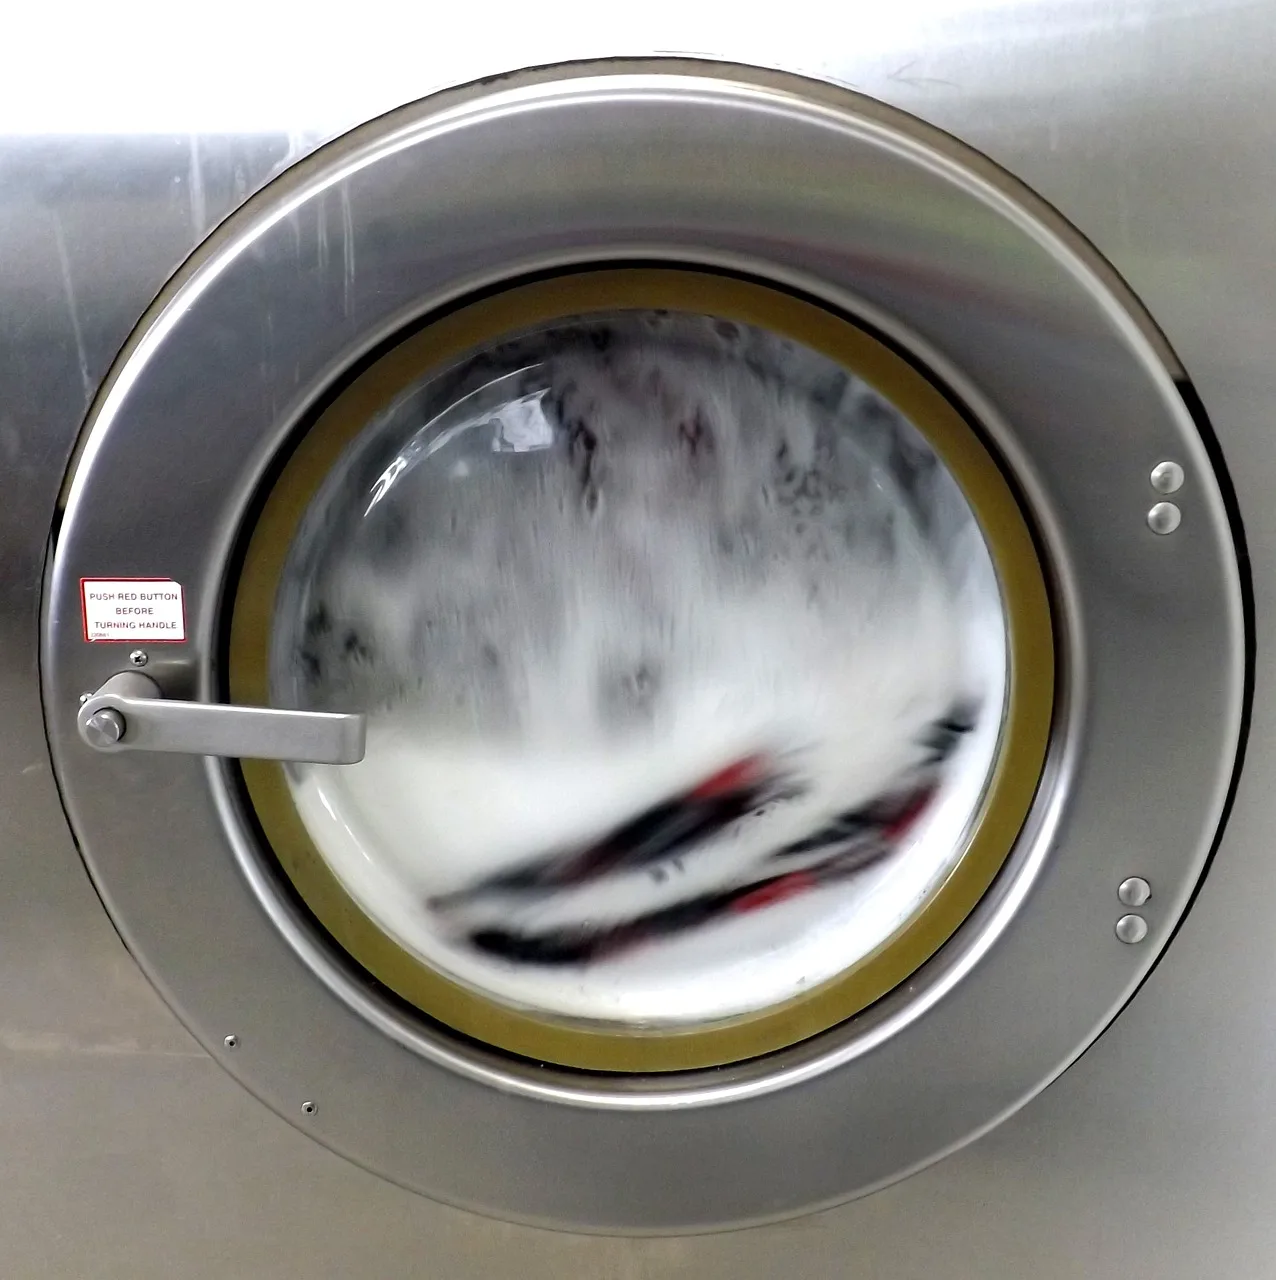 laundromat, washing machine, soap-1567859.jpg